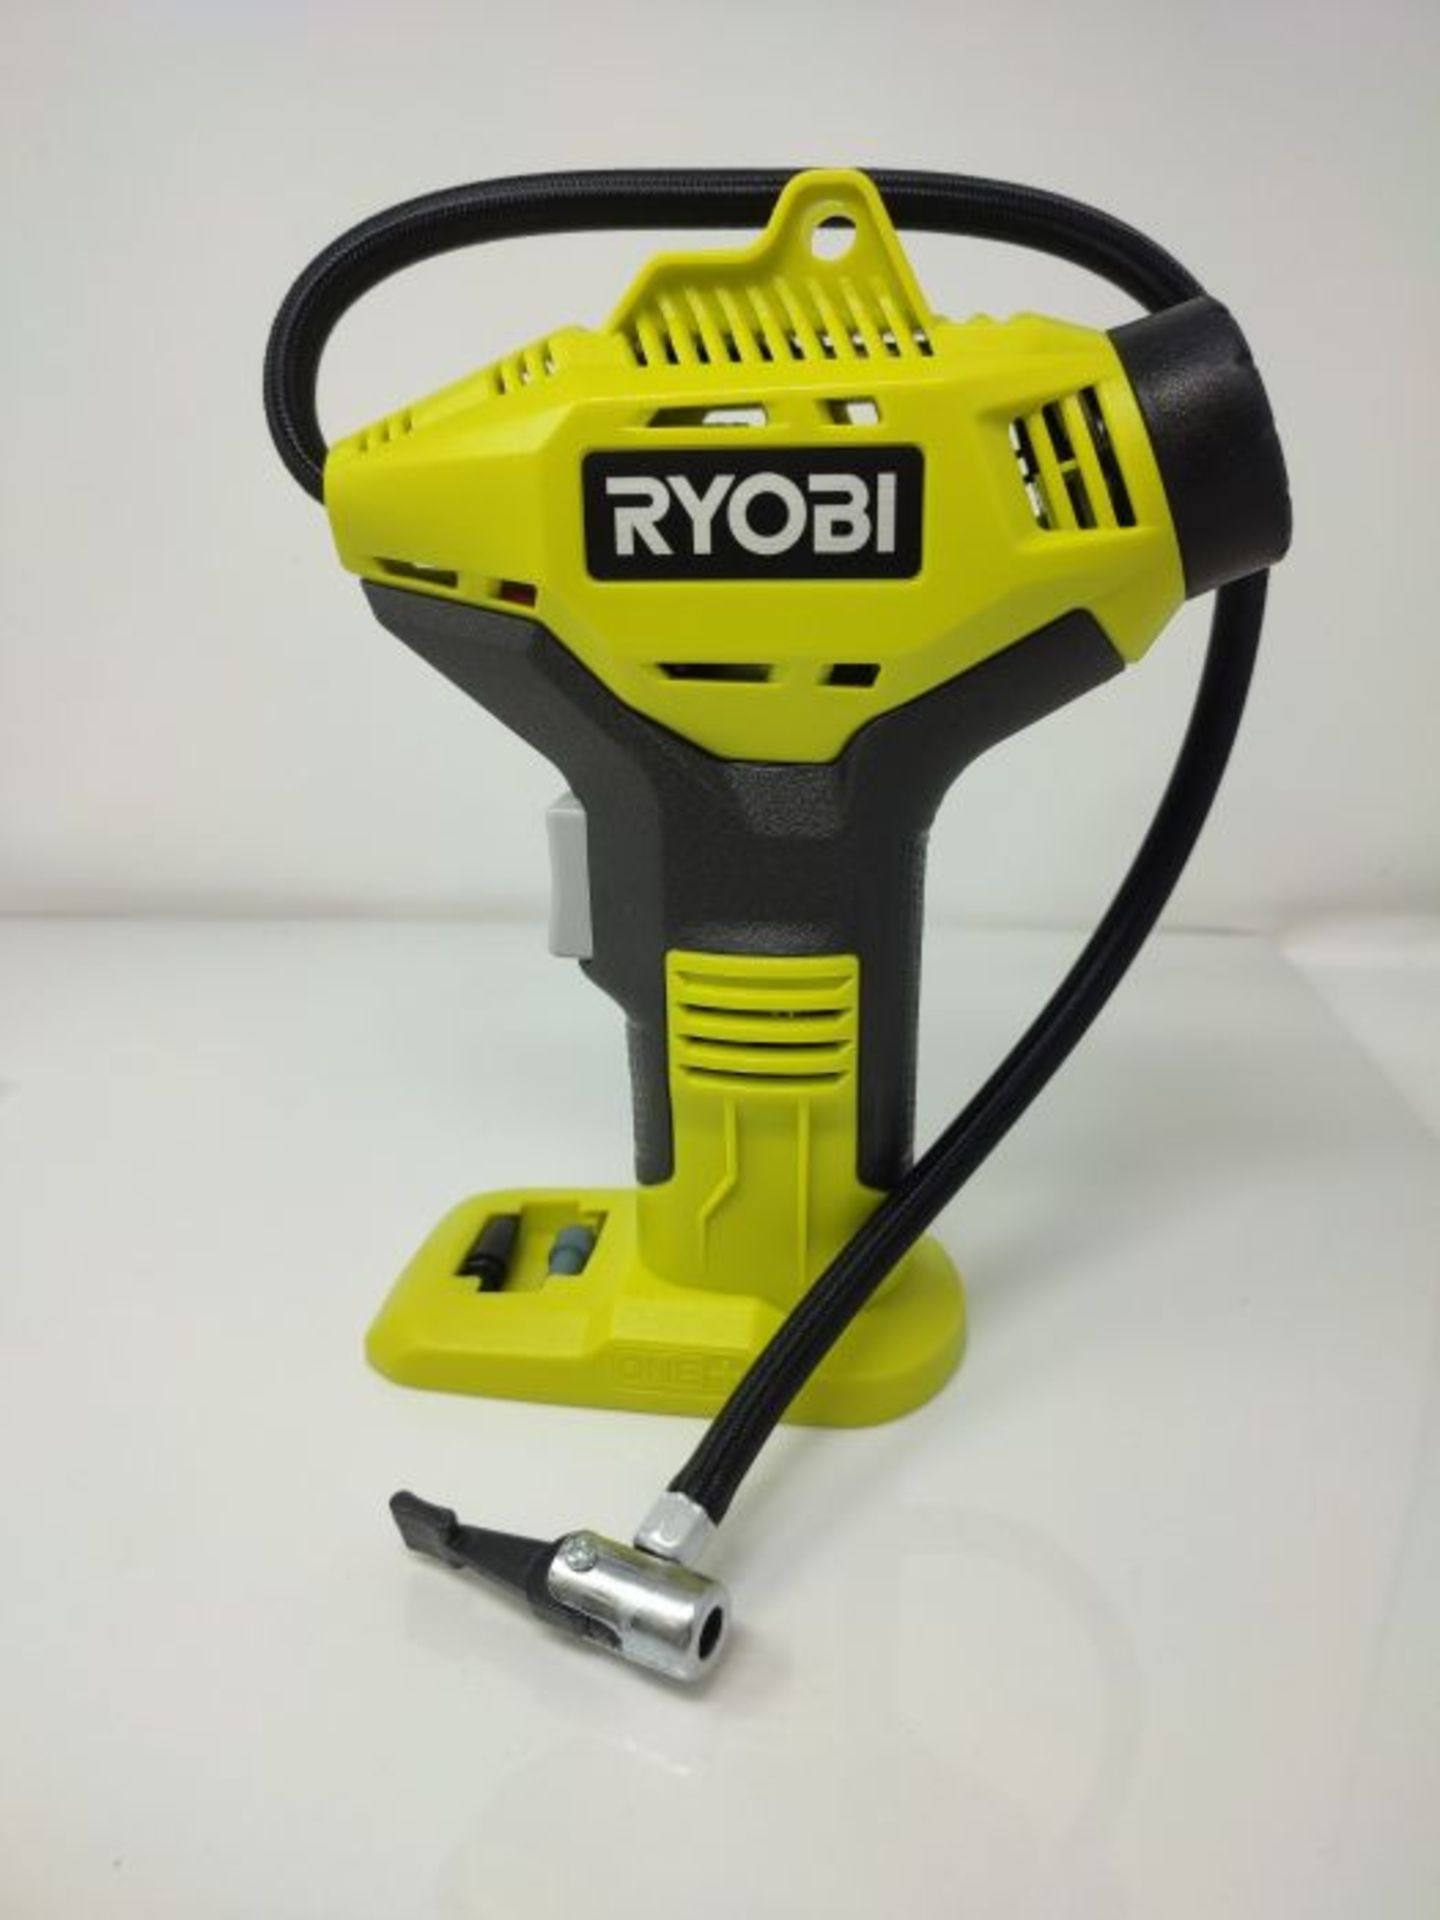 Ryobi R18PI-0 18V ONE+ Cordless High Pressure Inflator (Body Only), Grey - Image 3 of 3